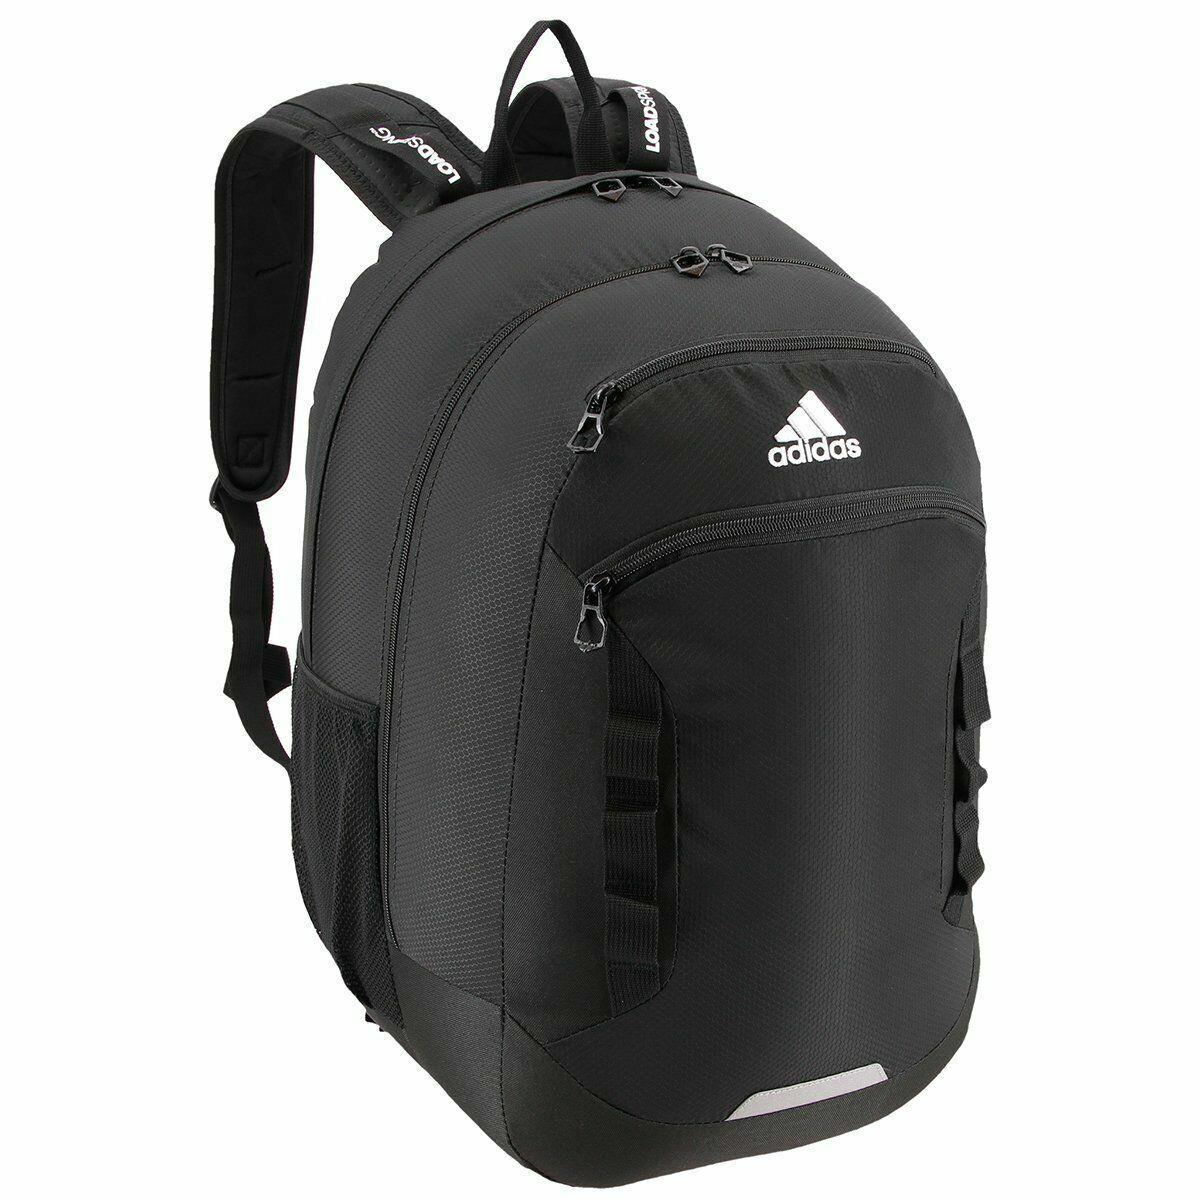 Adidas Excel Iii Black Backpack Bag 5143204